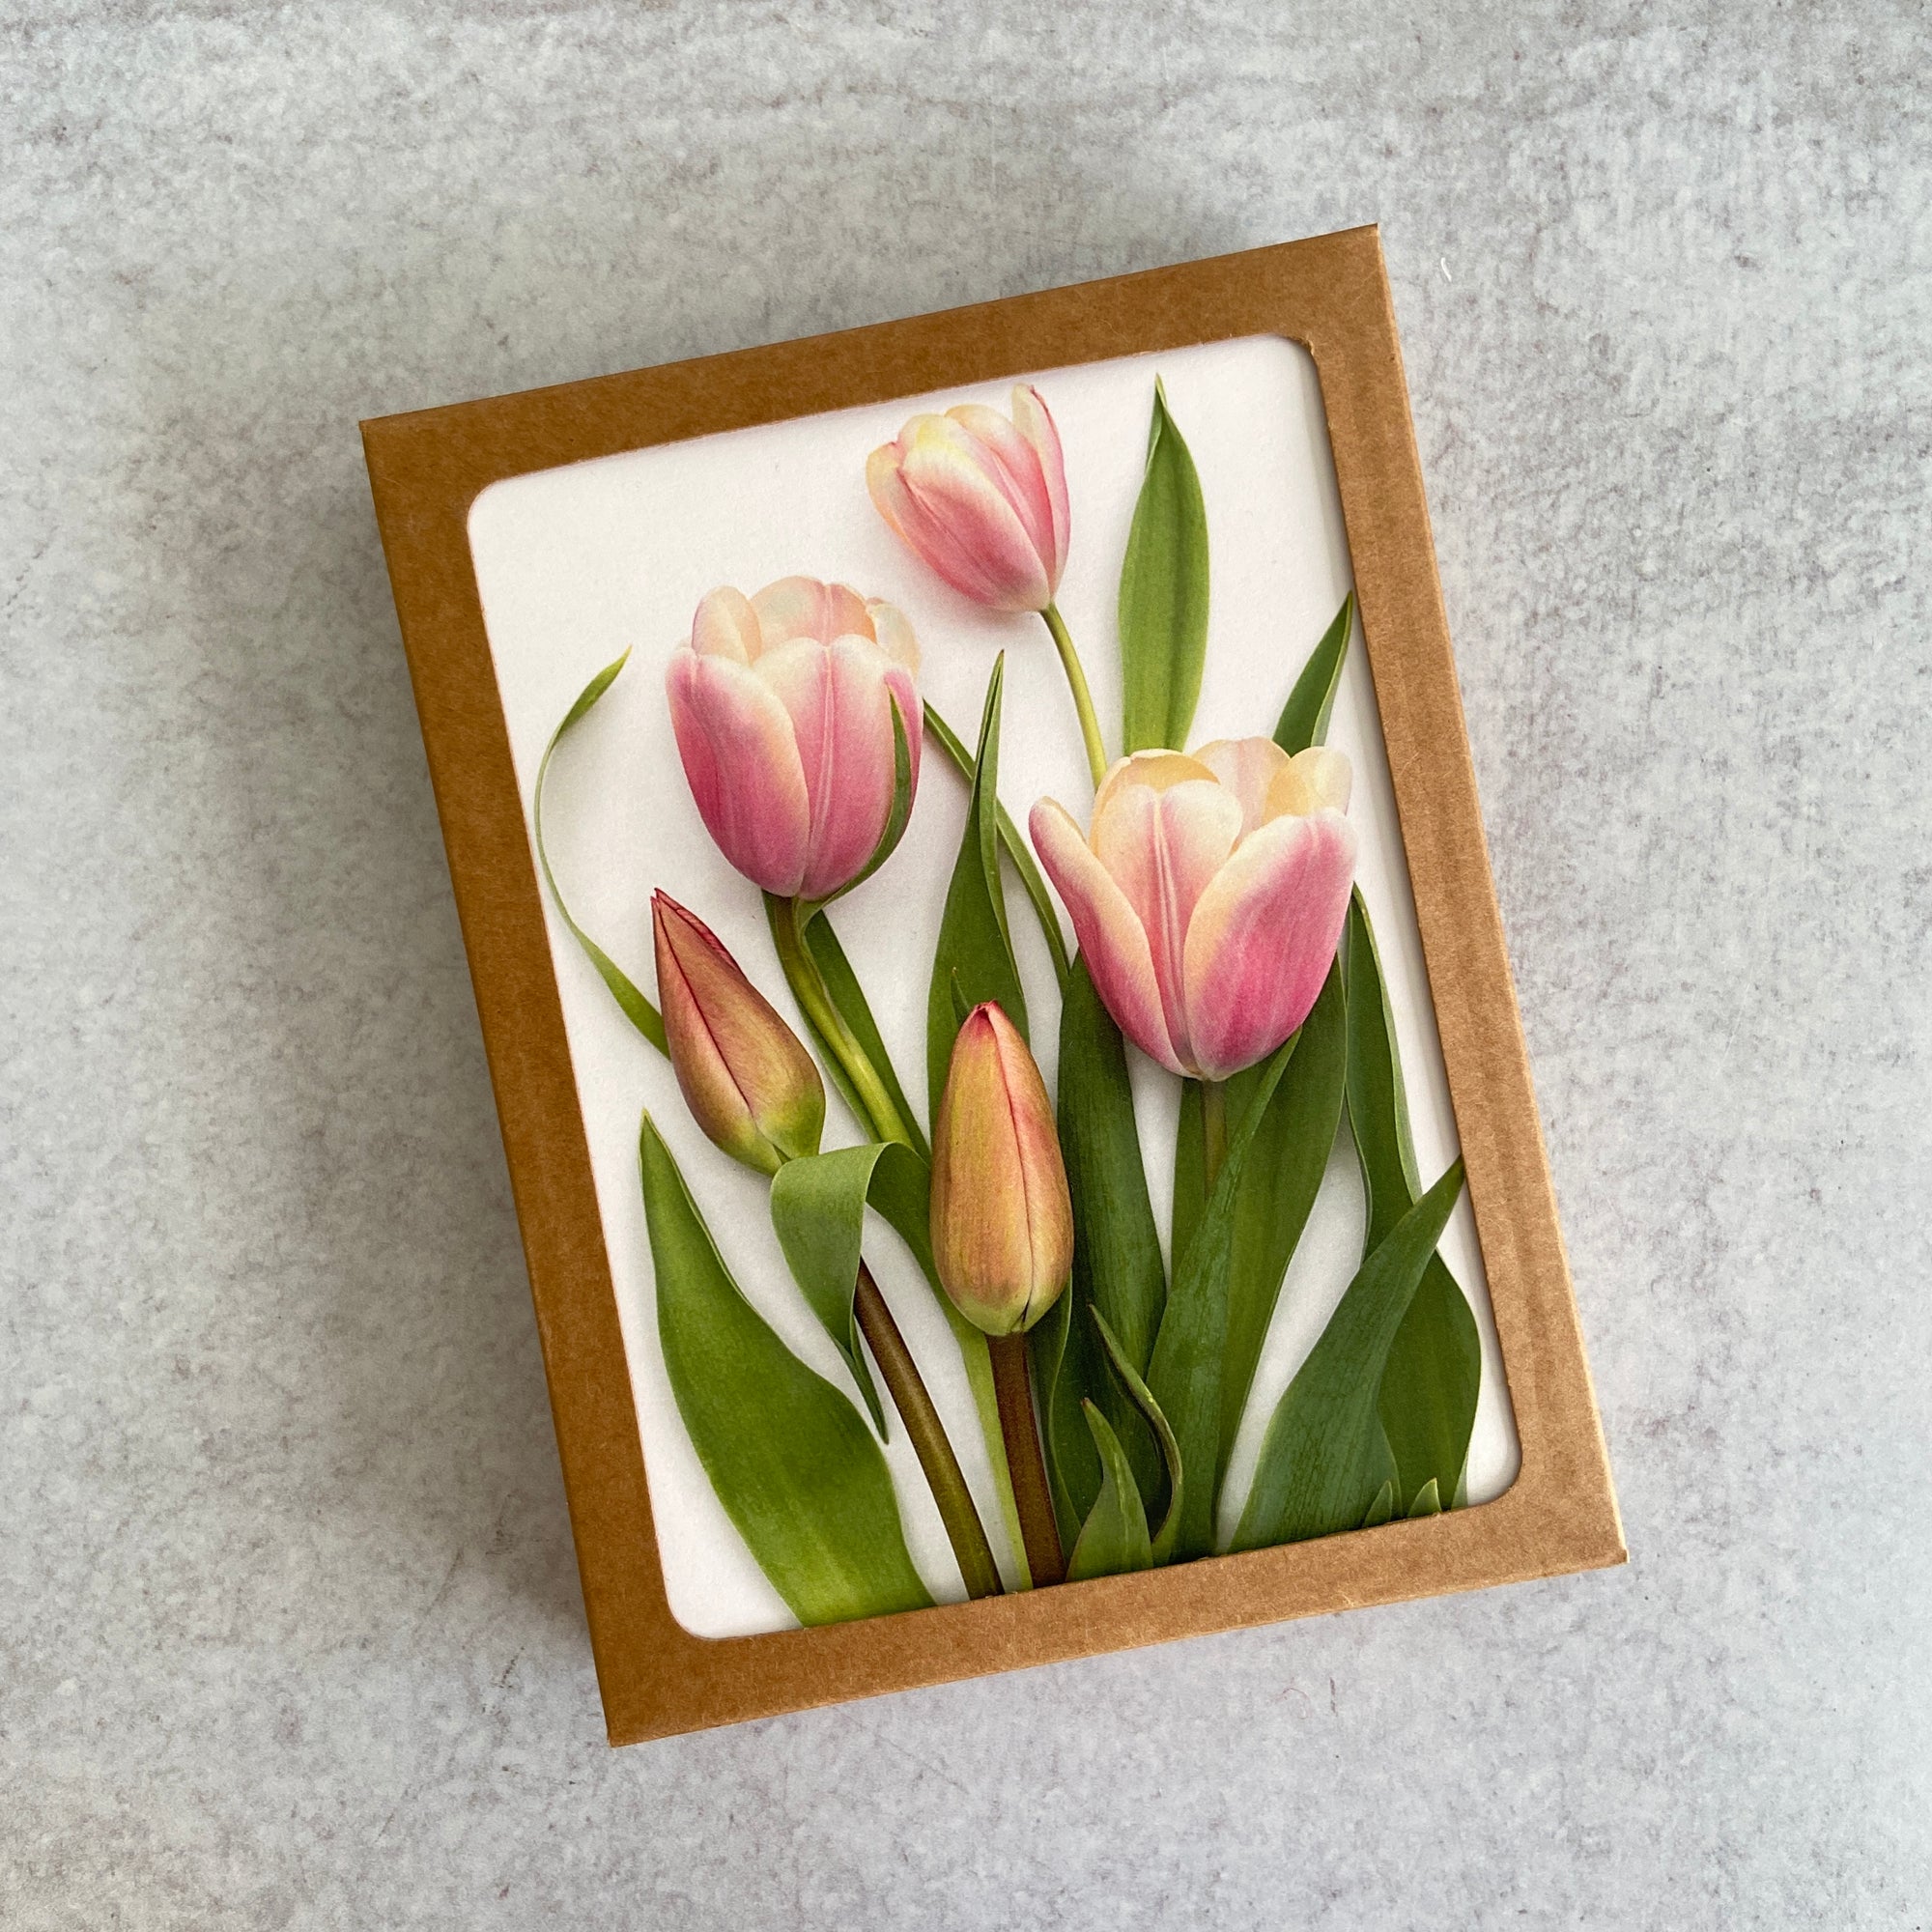 Pink Flowers of Spring Card Set